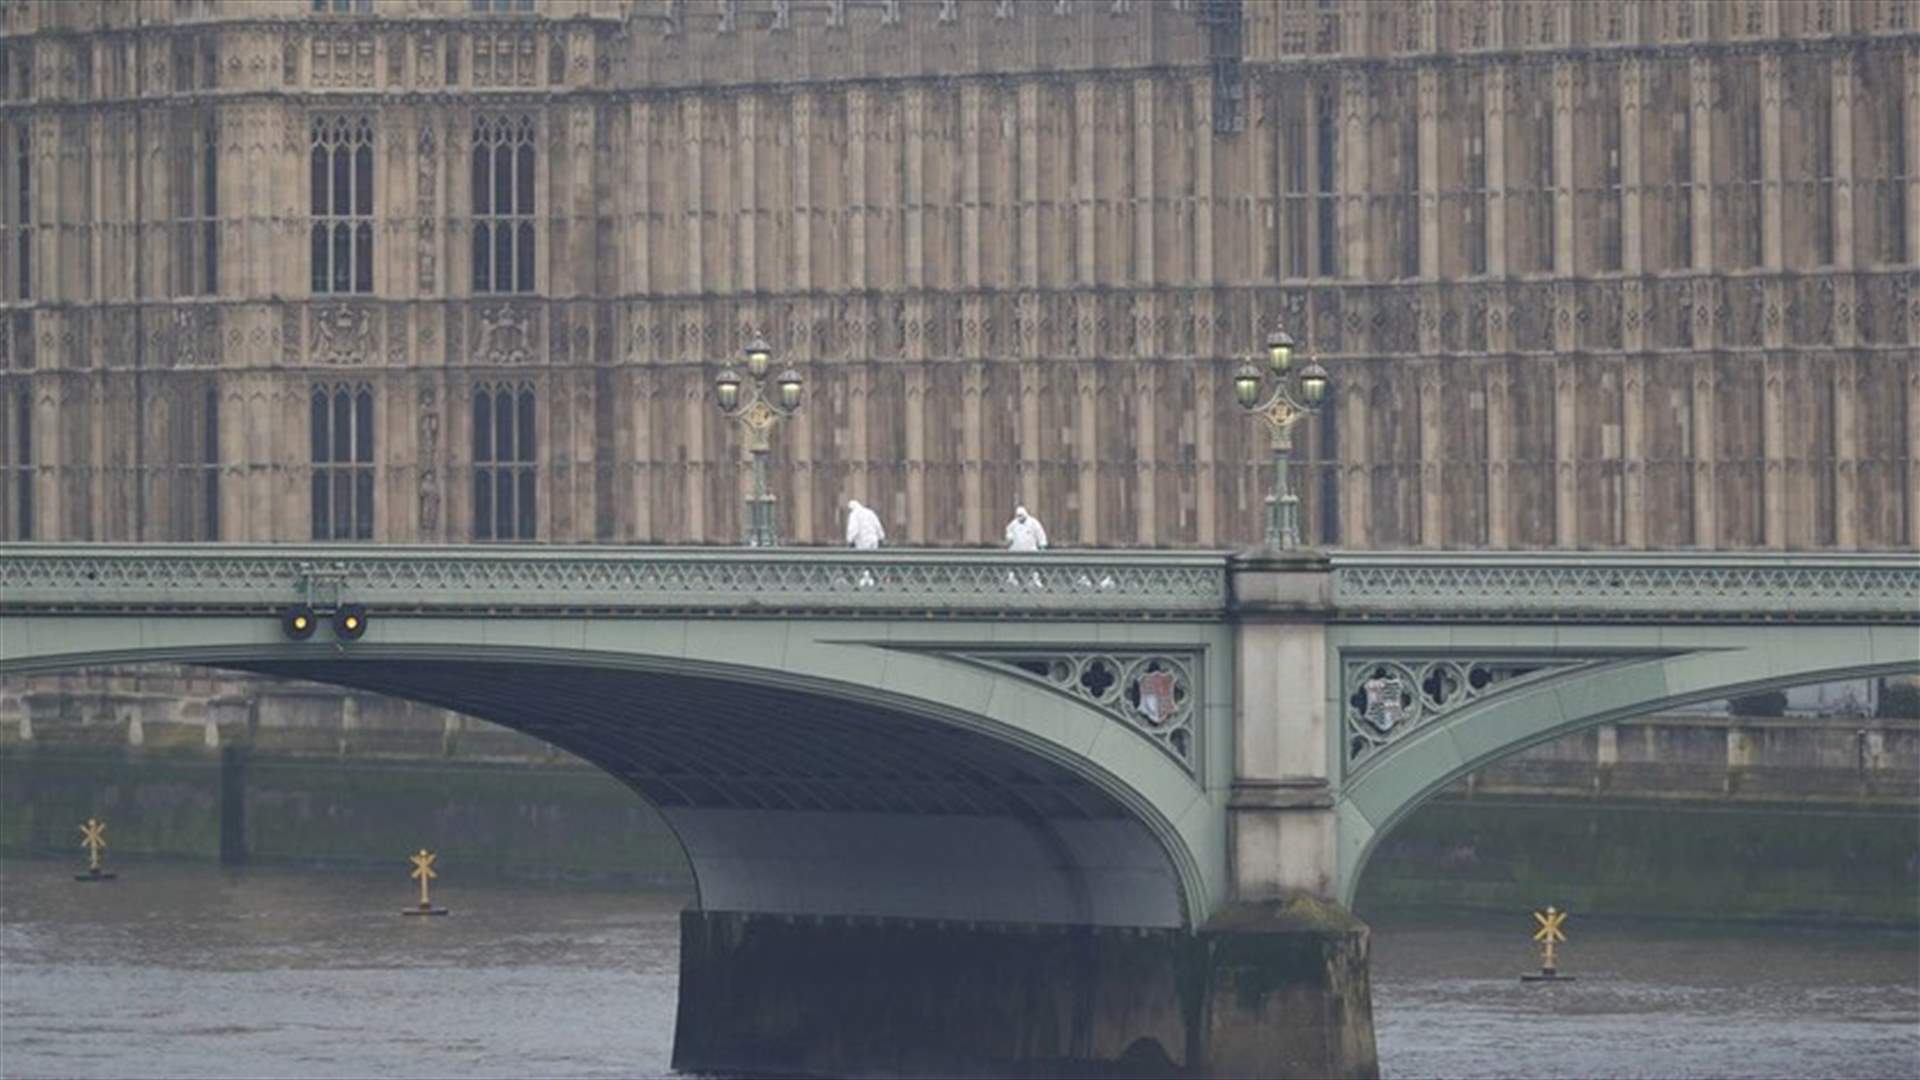 [VIDEO] Horrifying moment woman falls off bridge during London attack